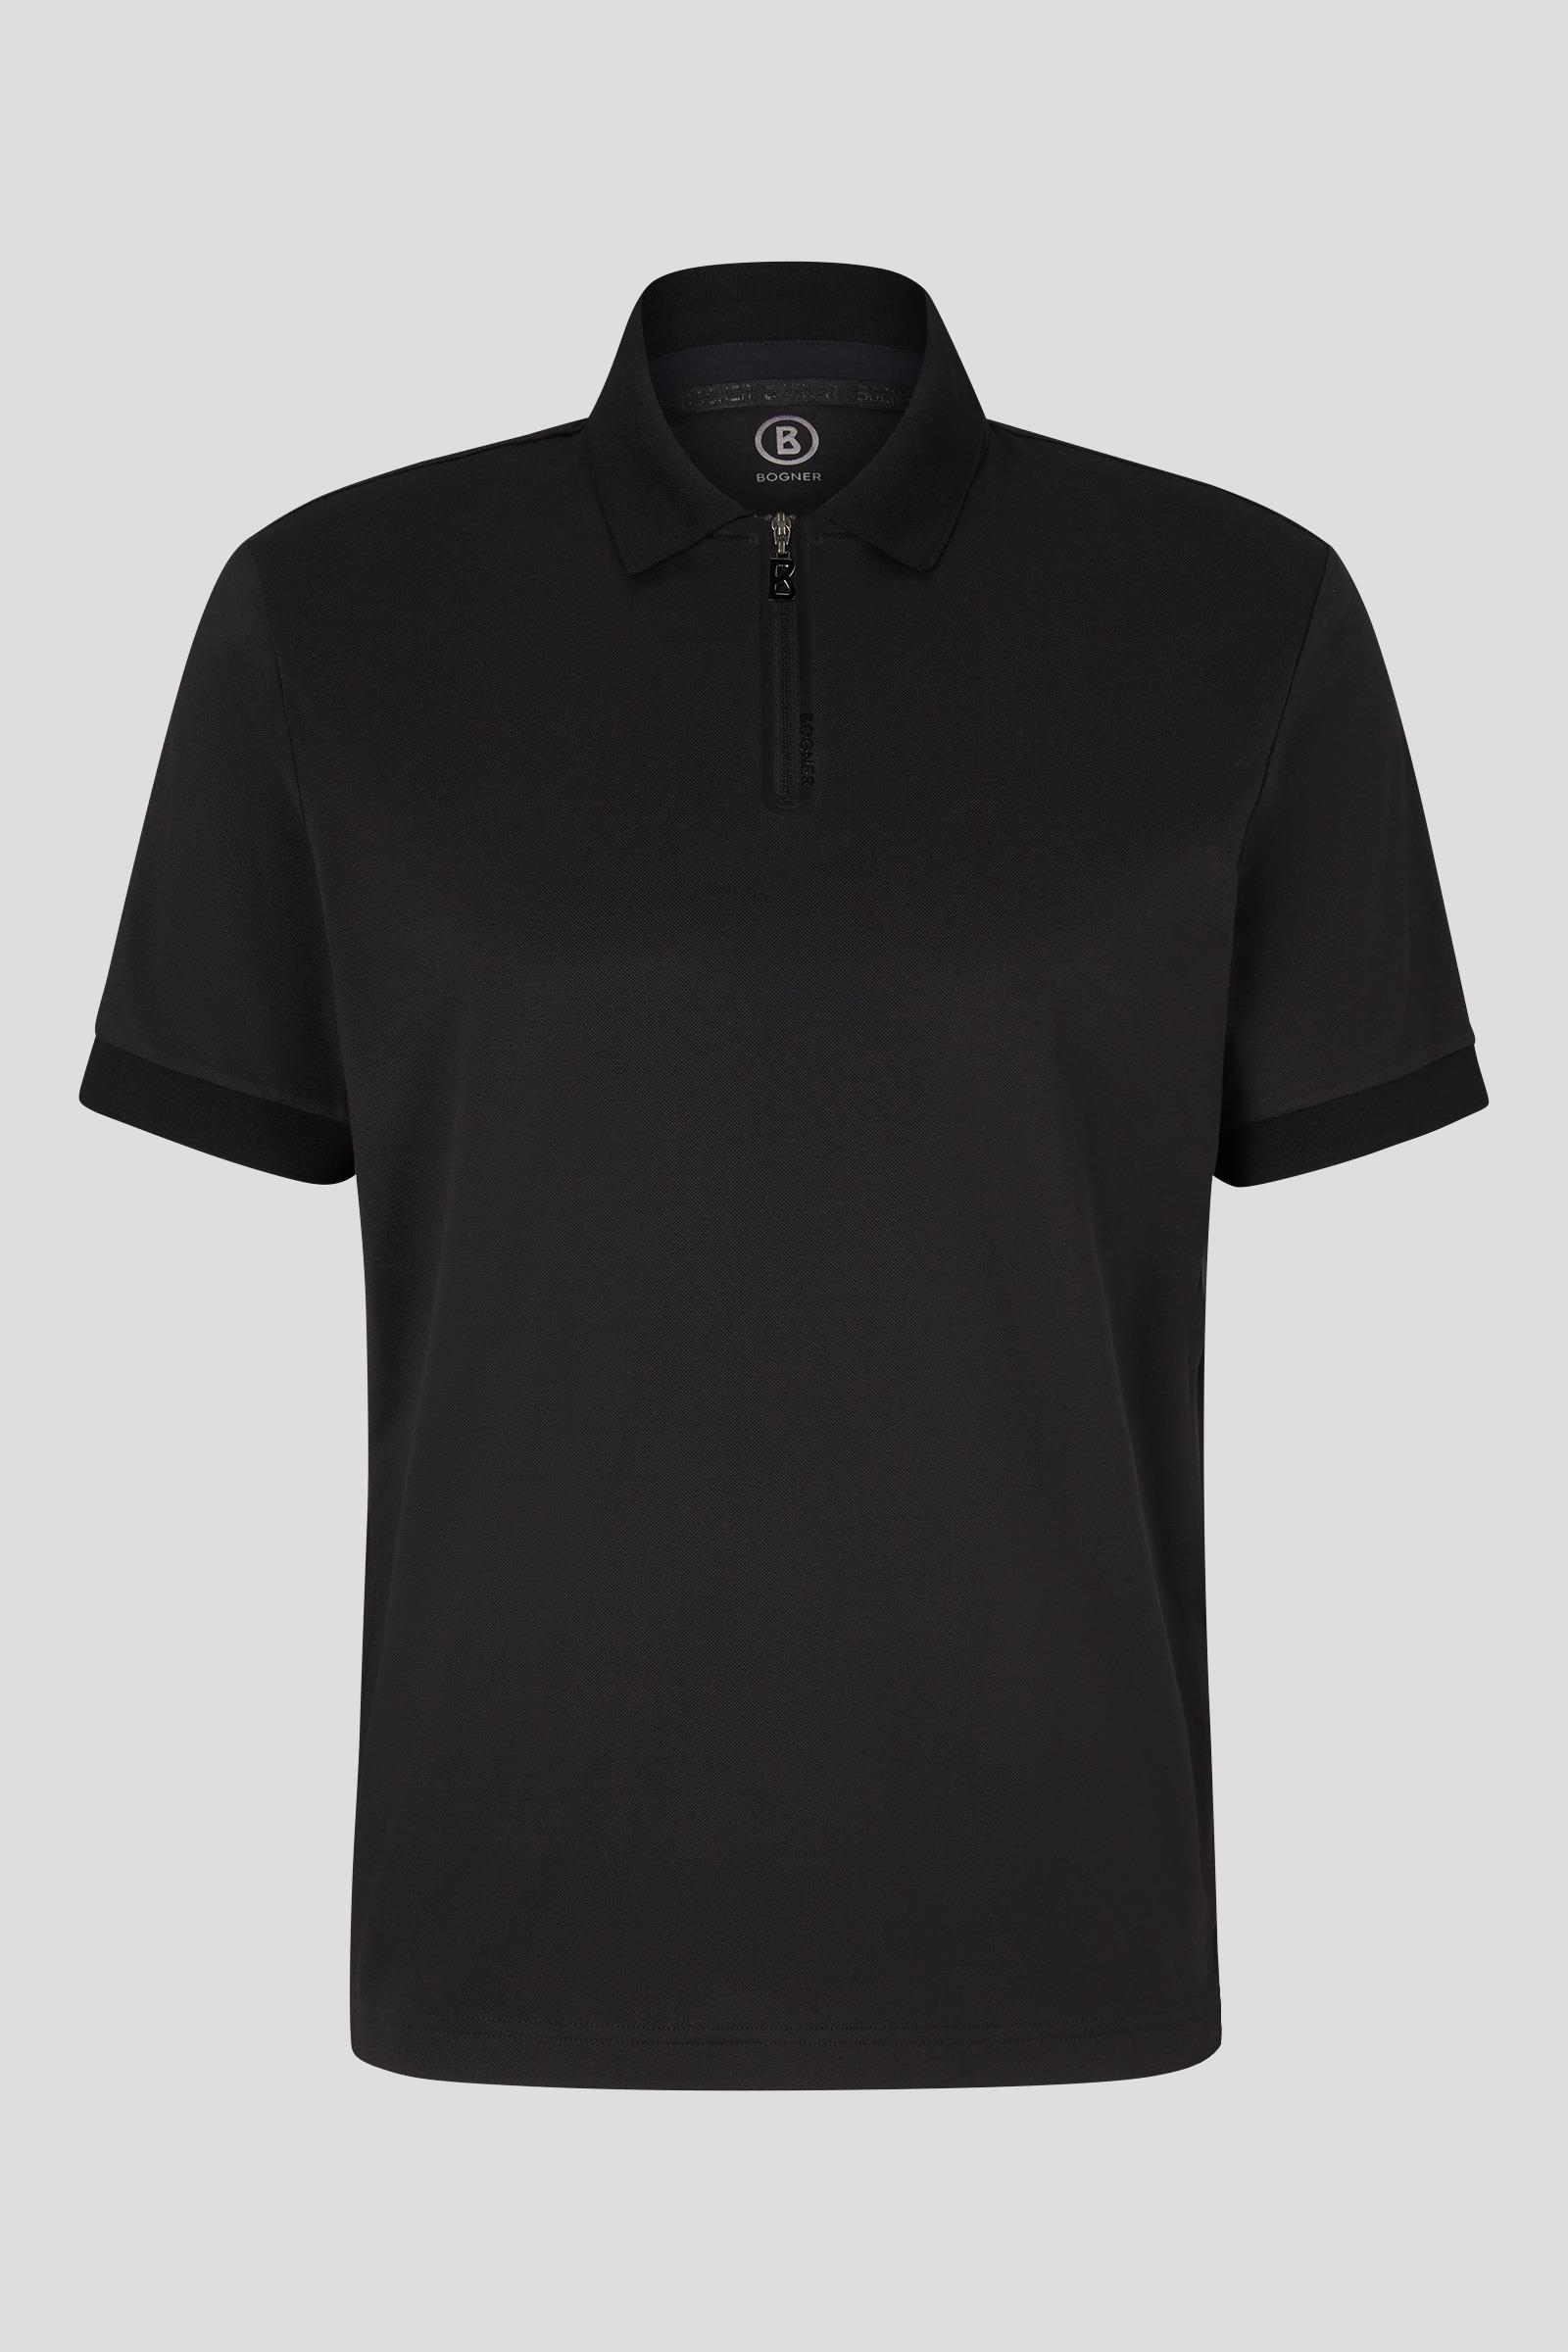 Bogner Noran Functional Polo Shirt in Black for Men | Lyst